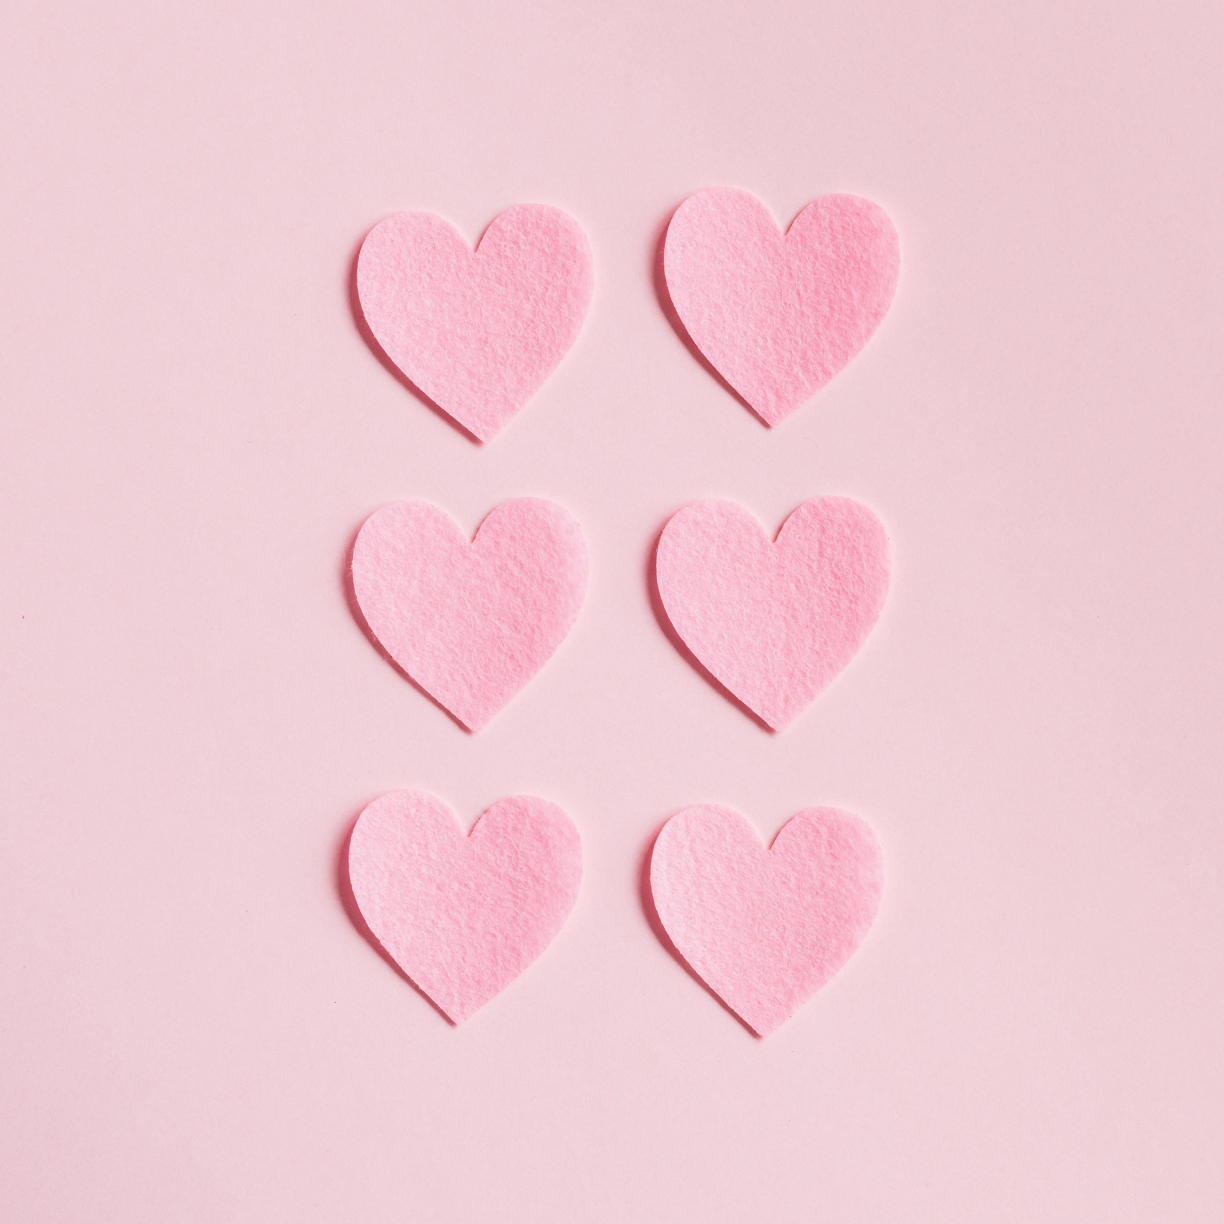 Wallpaper pink hearts, minimal desktop wallpaper, hd image, picture,  background, 51a65b | wallpapersmug